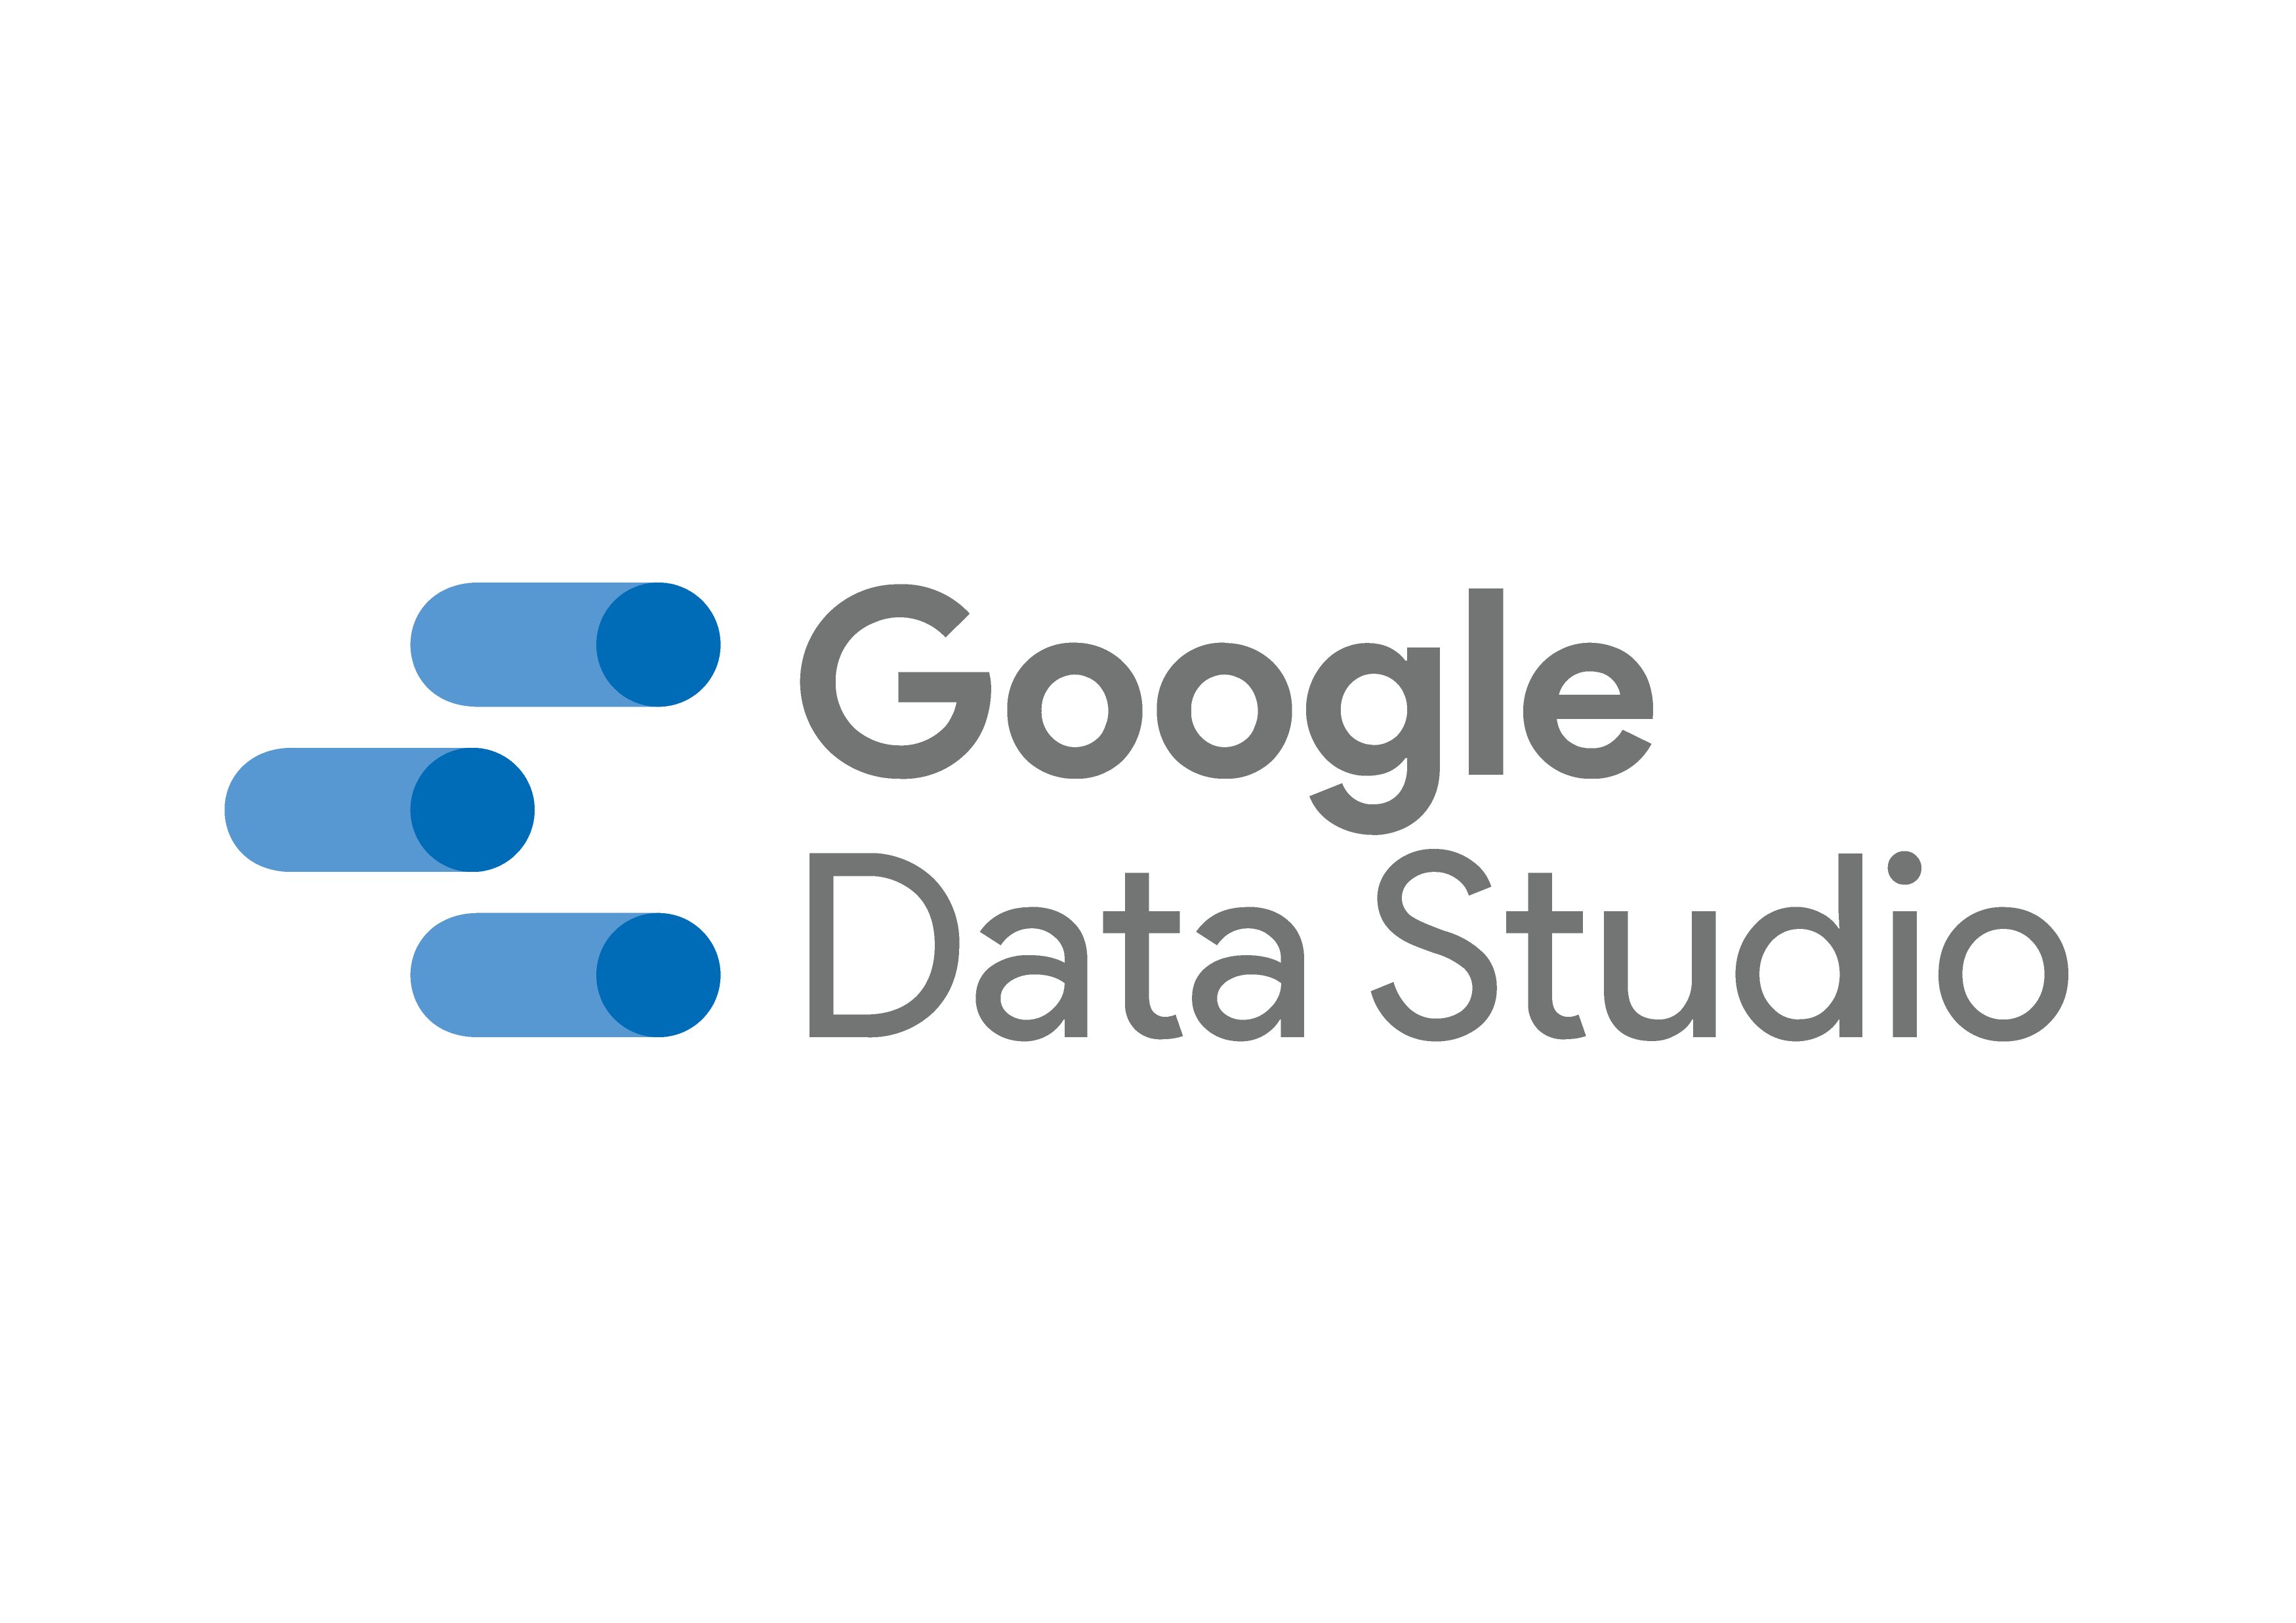 Google Data studio logo